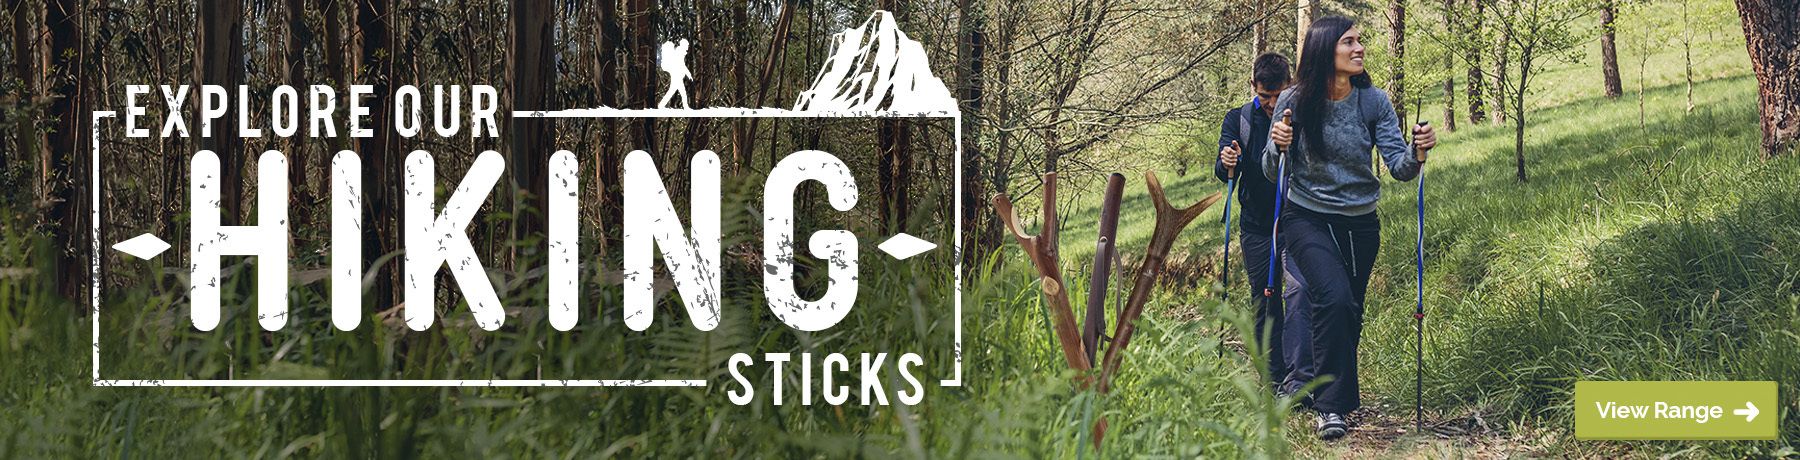 Explore Our Range of Hiking Sticks